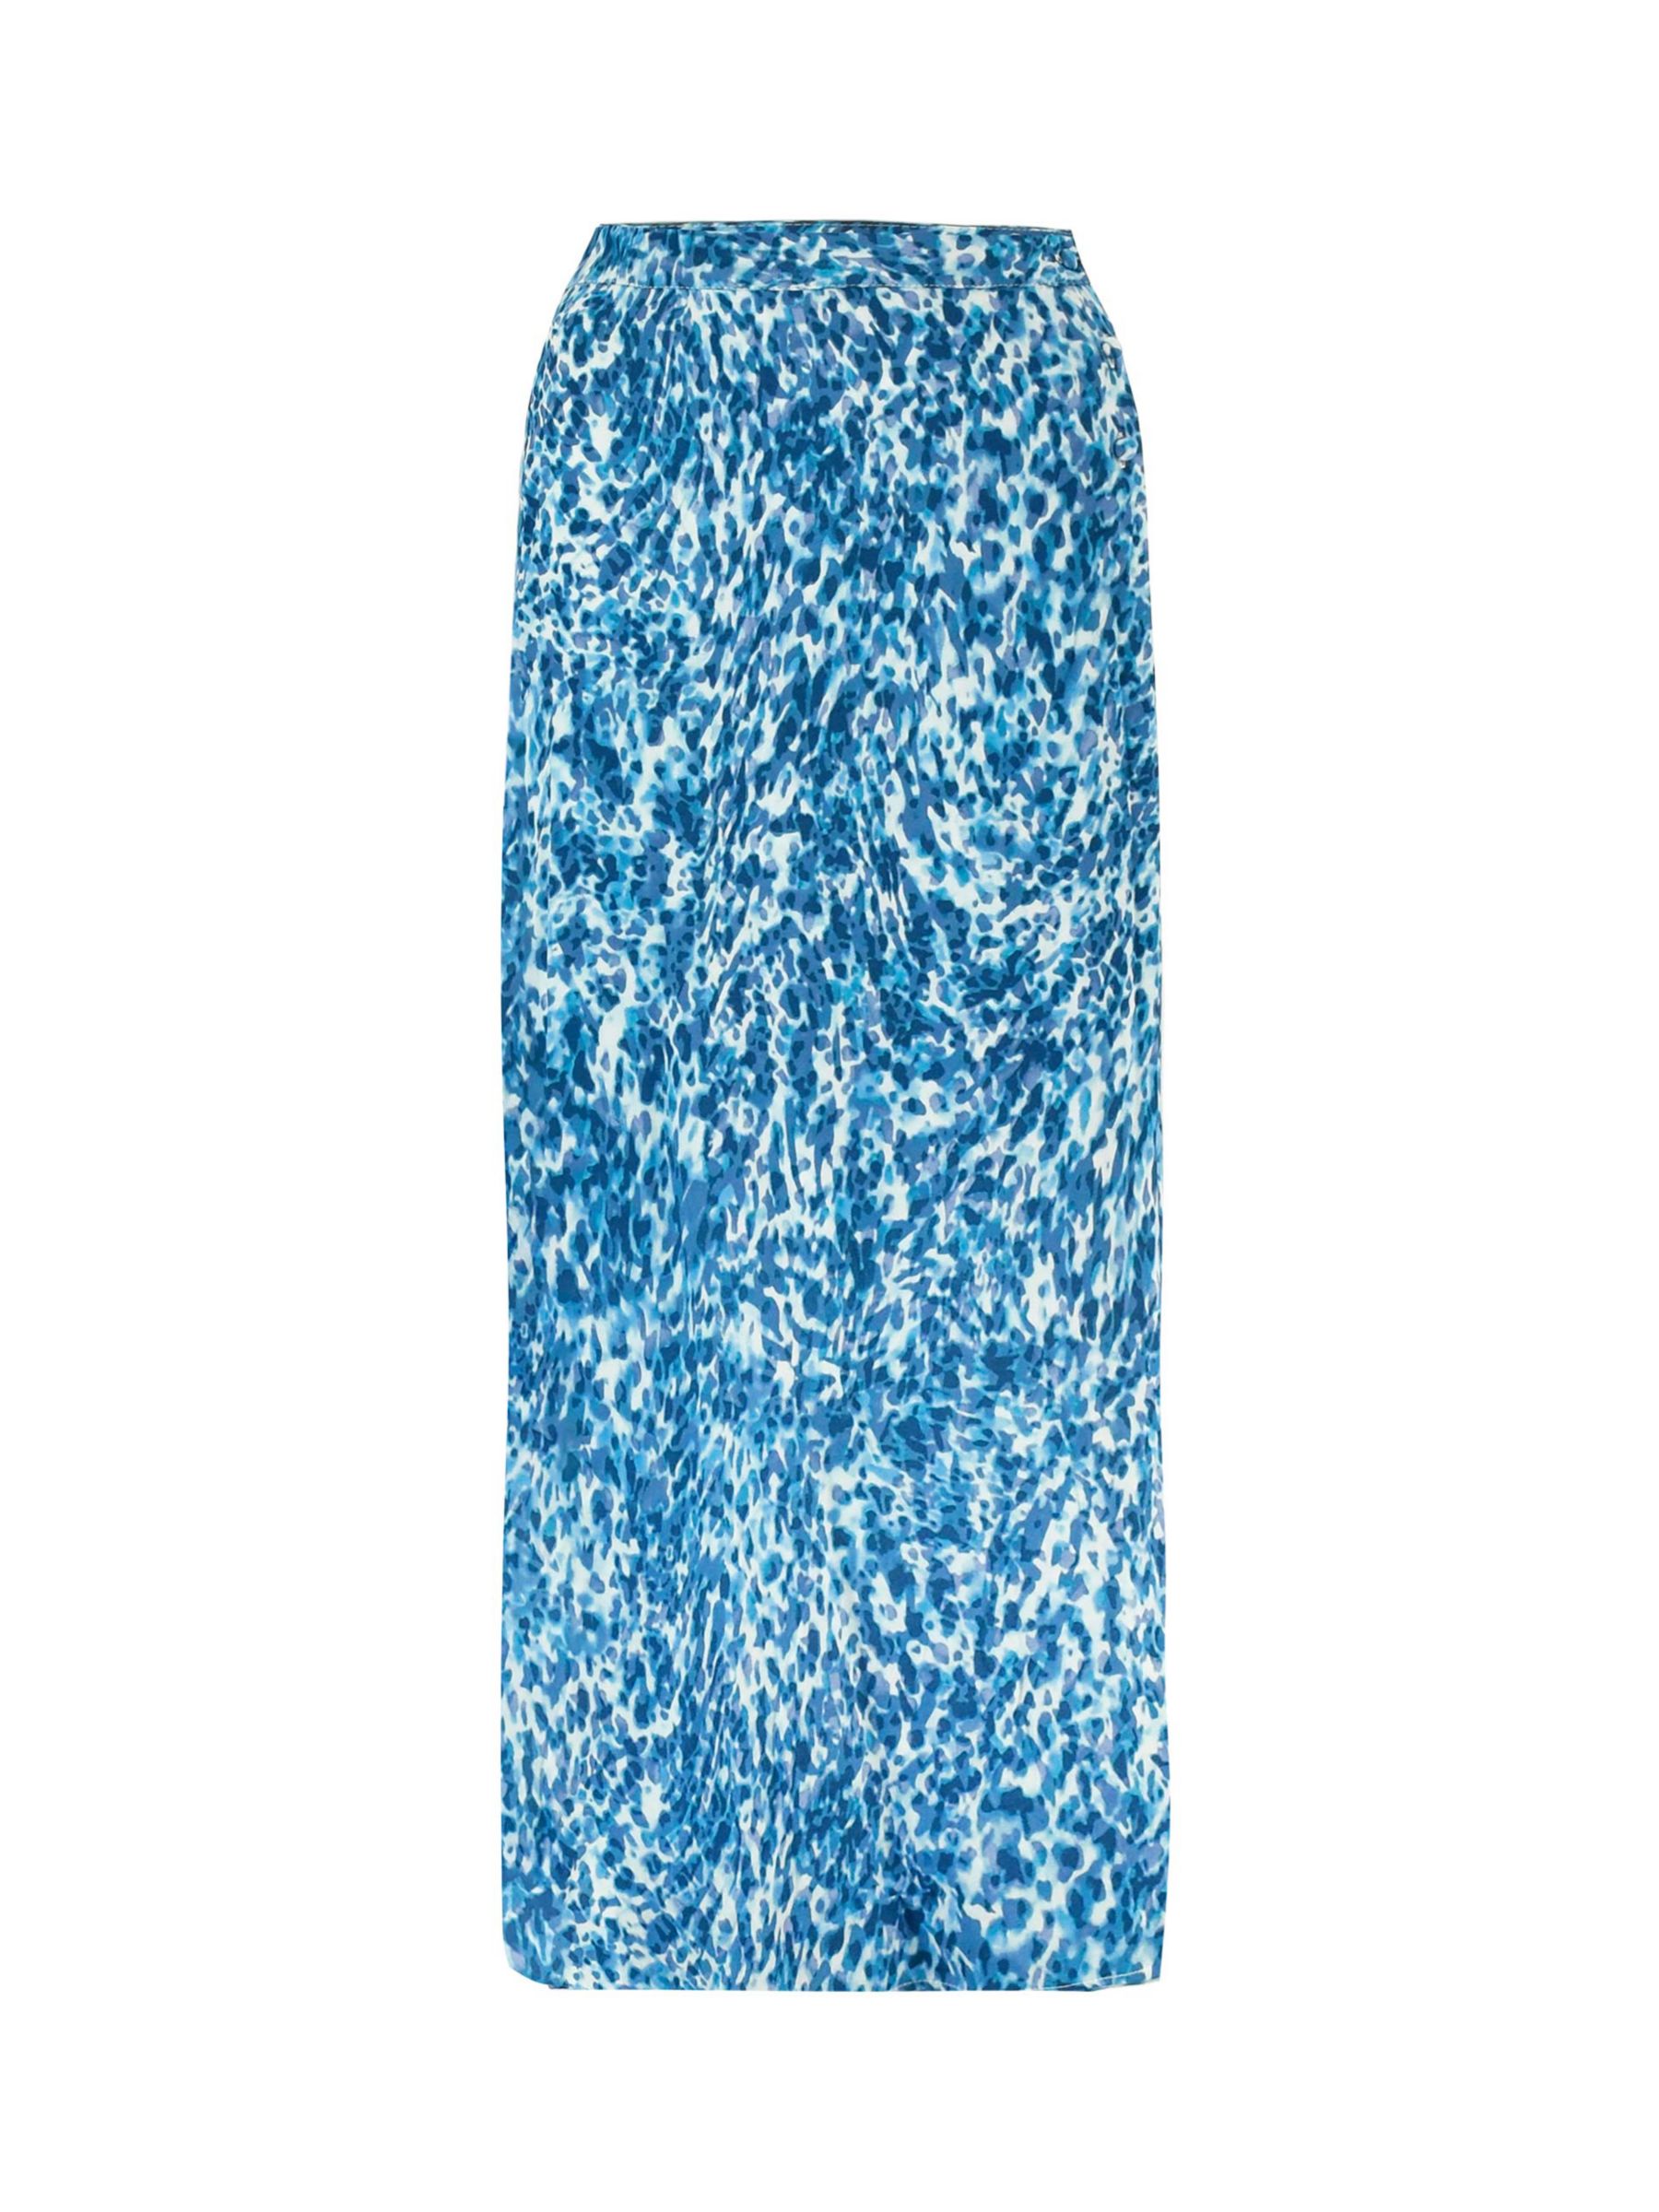 Ro&Zo Blurred Animal Print Wrap Skirt, Blue at John Lewis & Partners